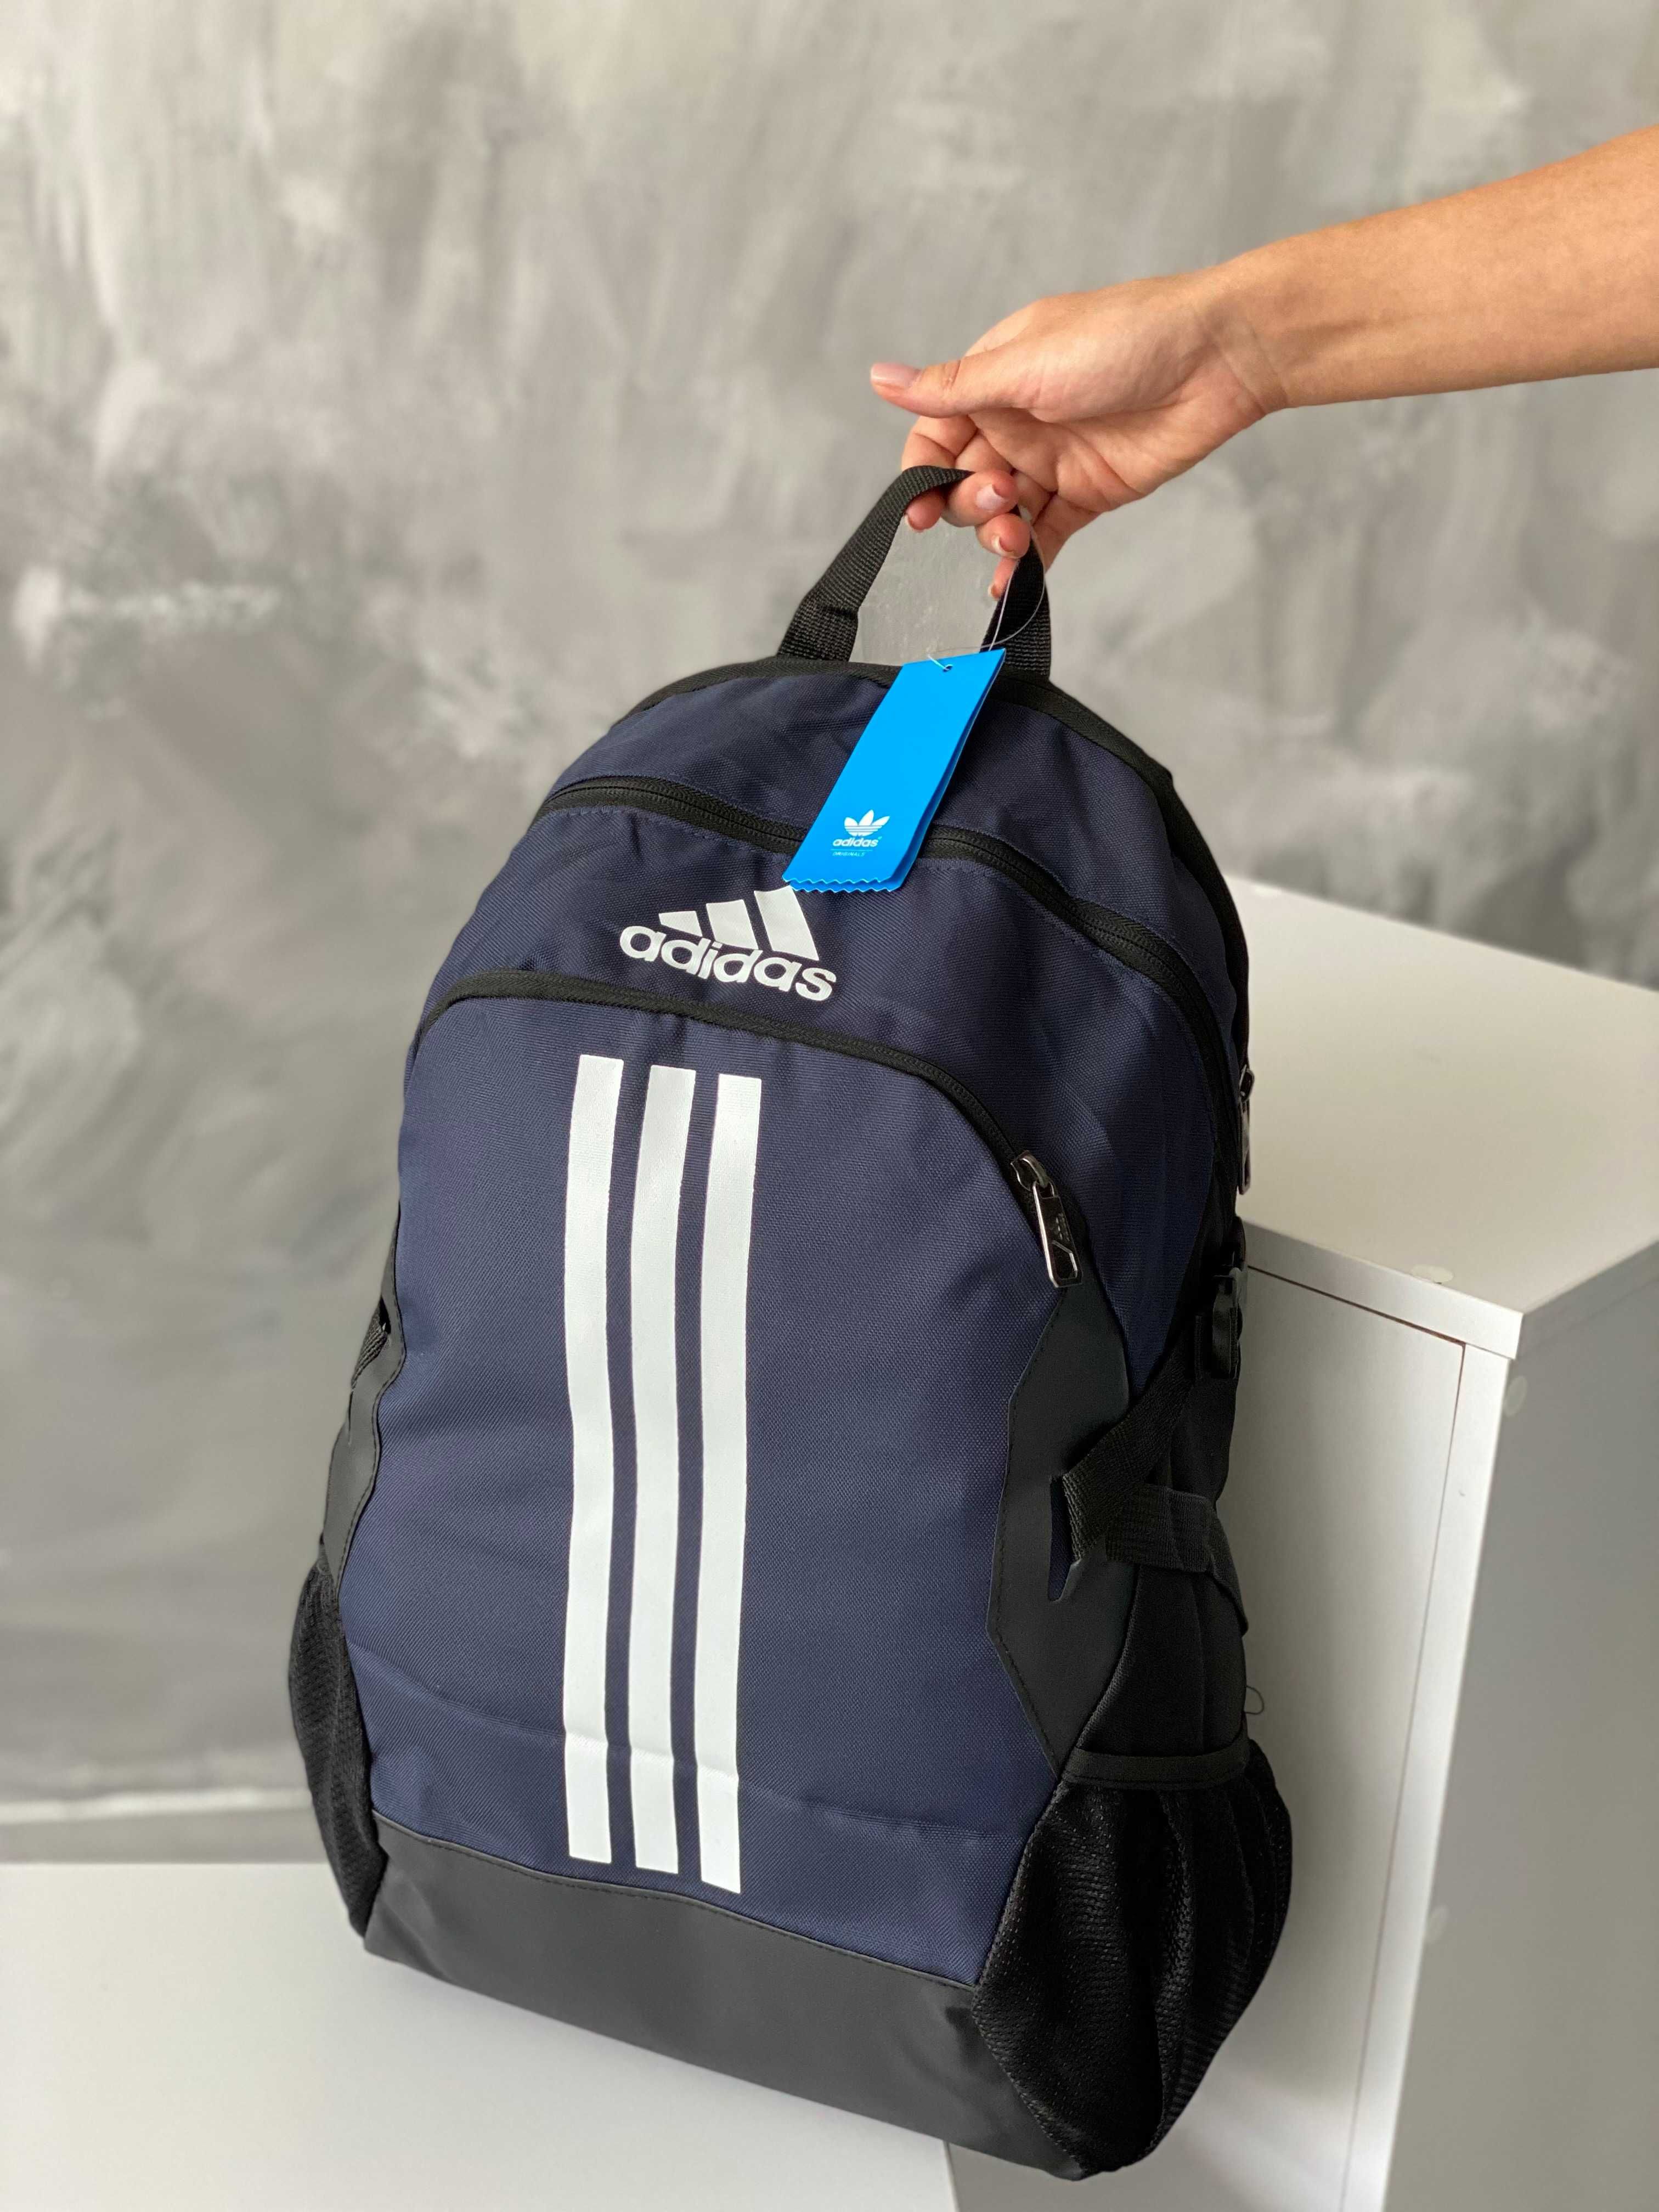 Рюкзак Adidas/Сумка/Міський рюкзак/Спортивный рюкзак/Для путешествий